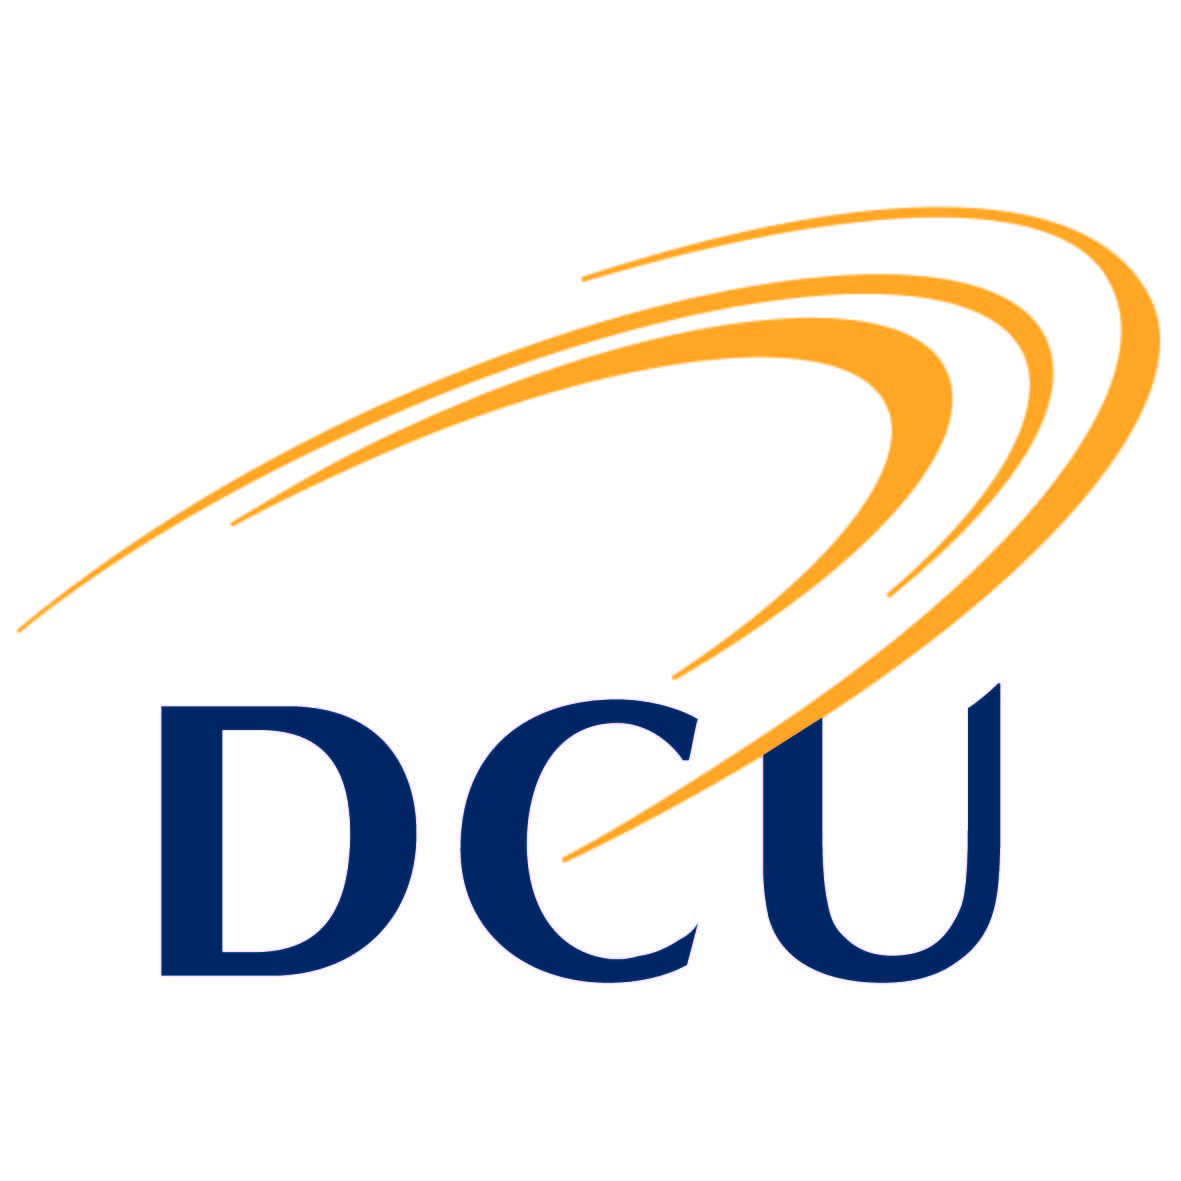 dublin city university logo 02